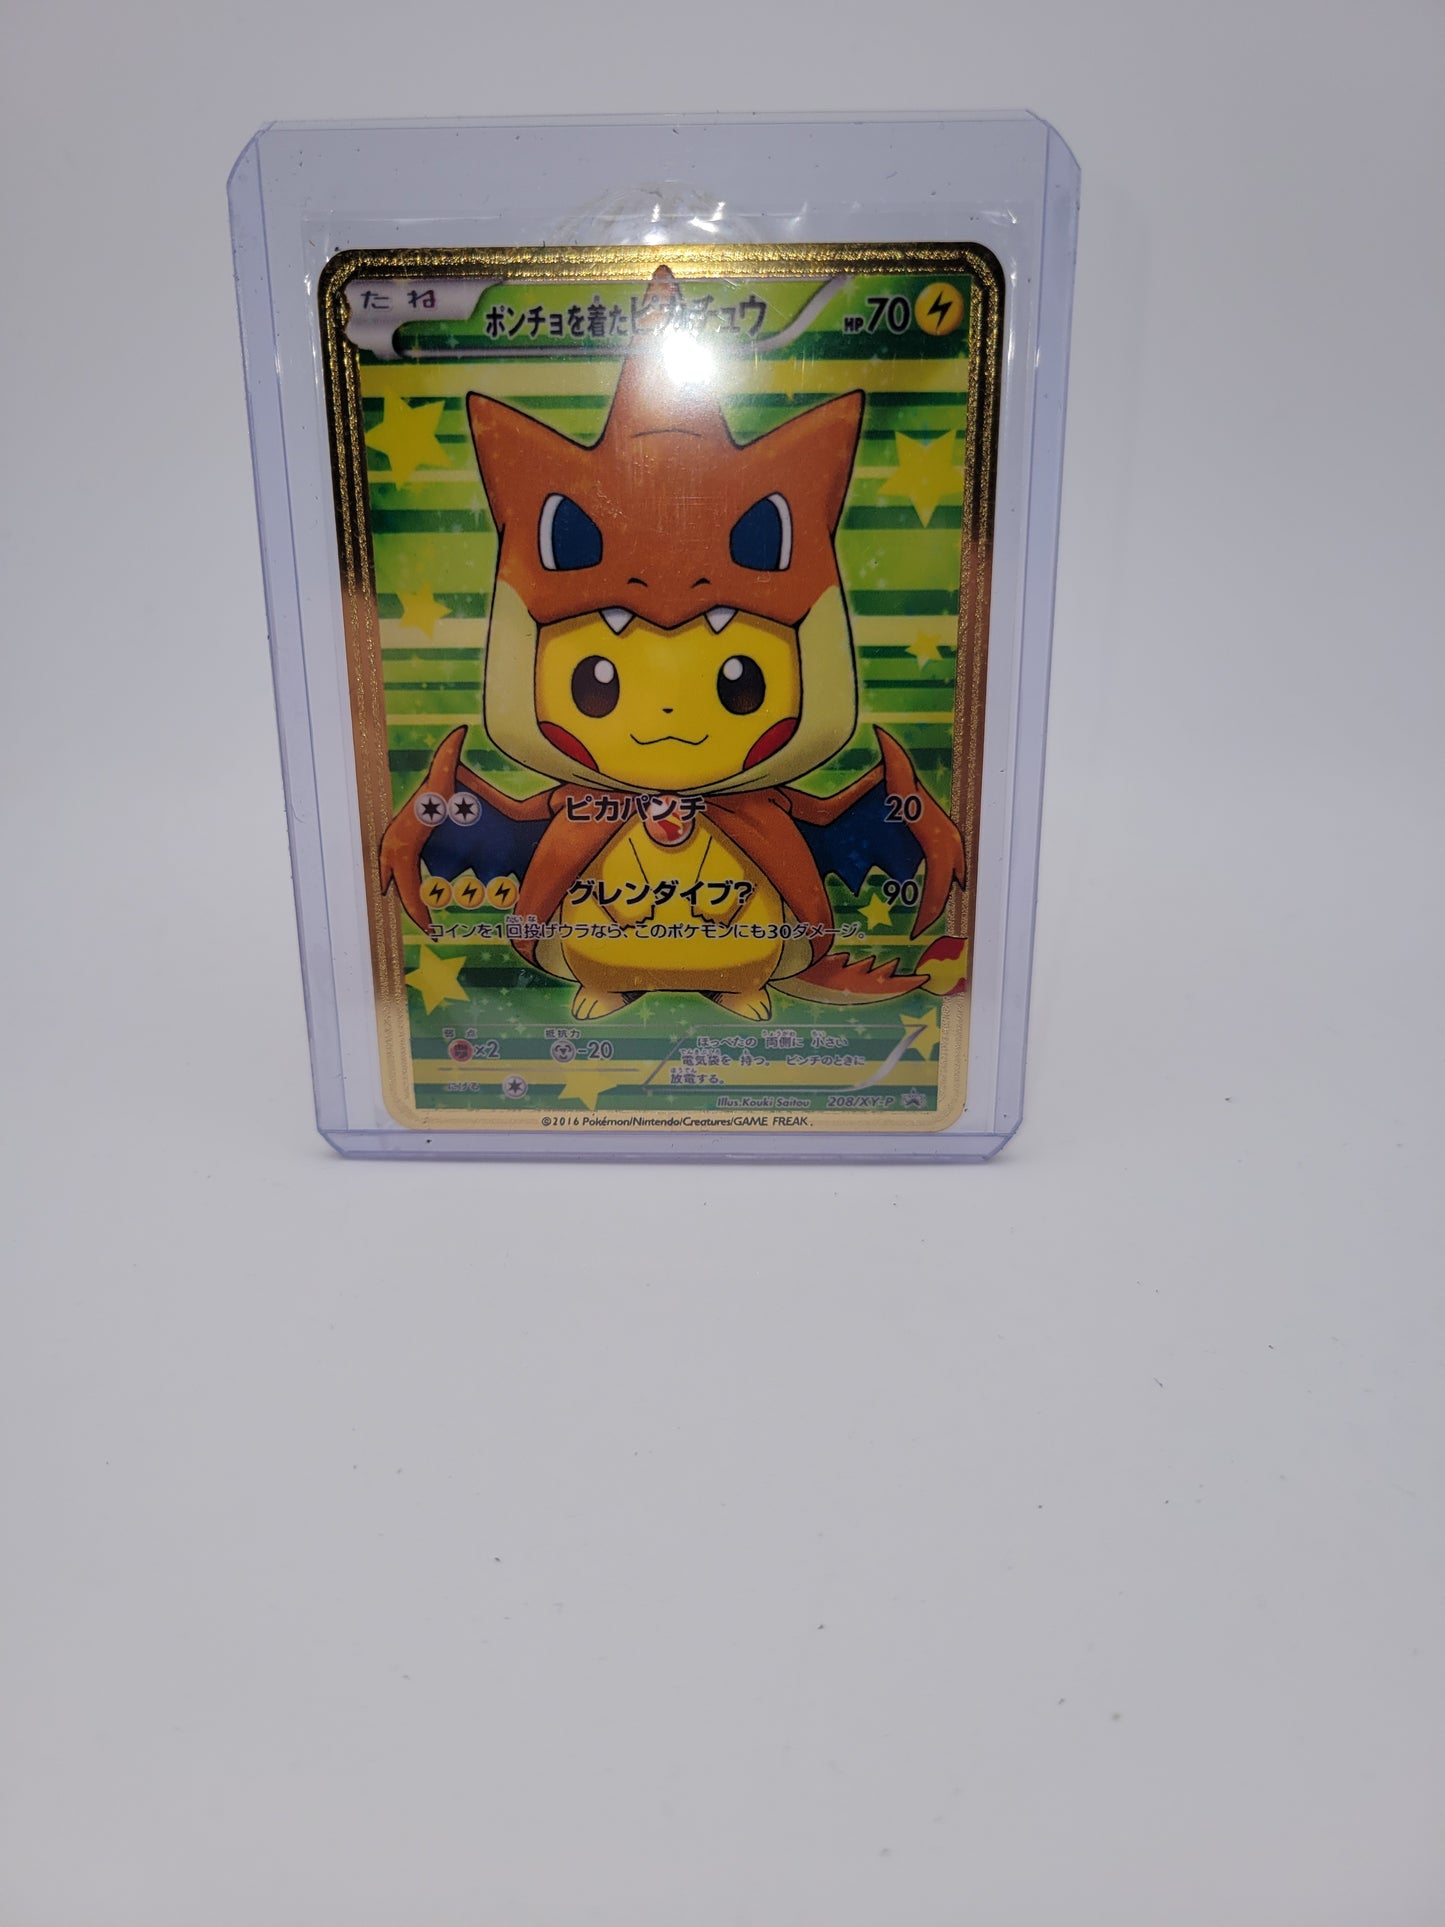 1 Fan Art gold card of Pikachu dressed up as Mega Charizard